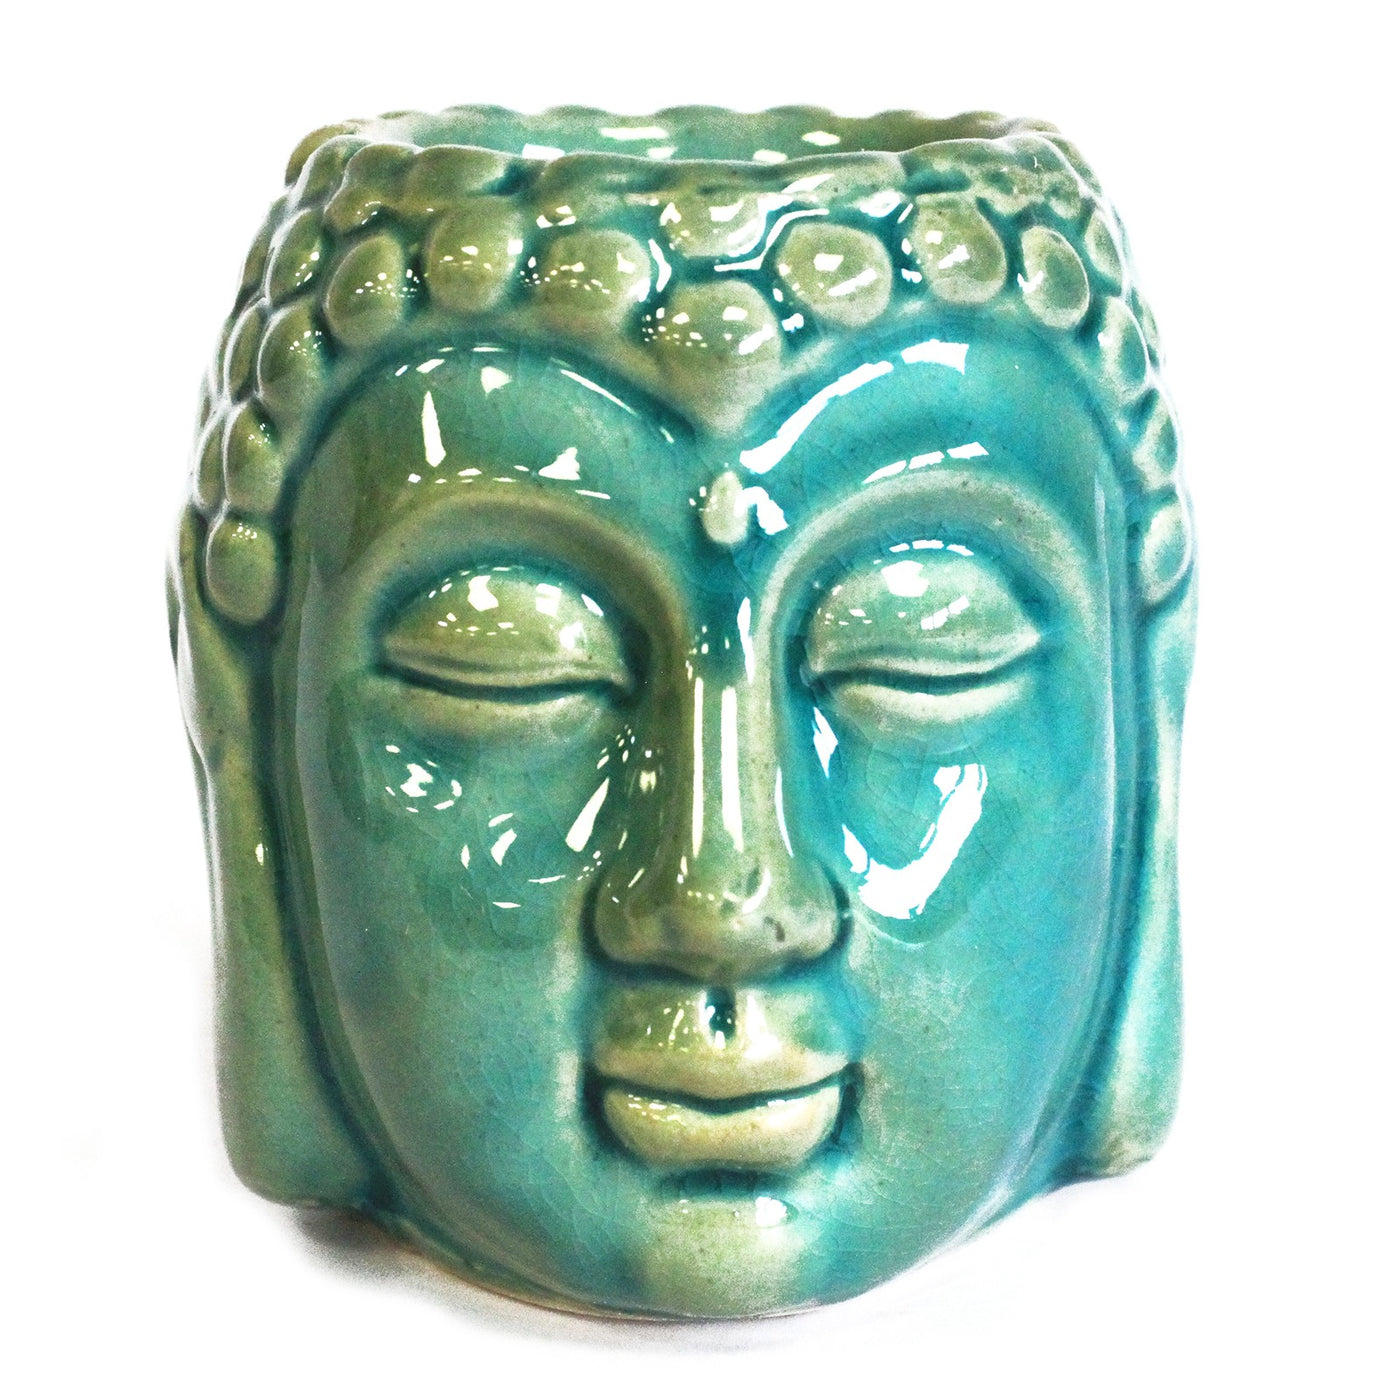 Blue Glazed Buddha Head Wax Melts And Oil Burner.